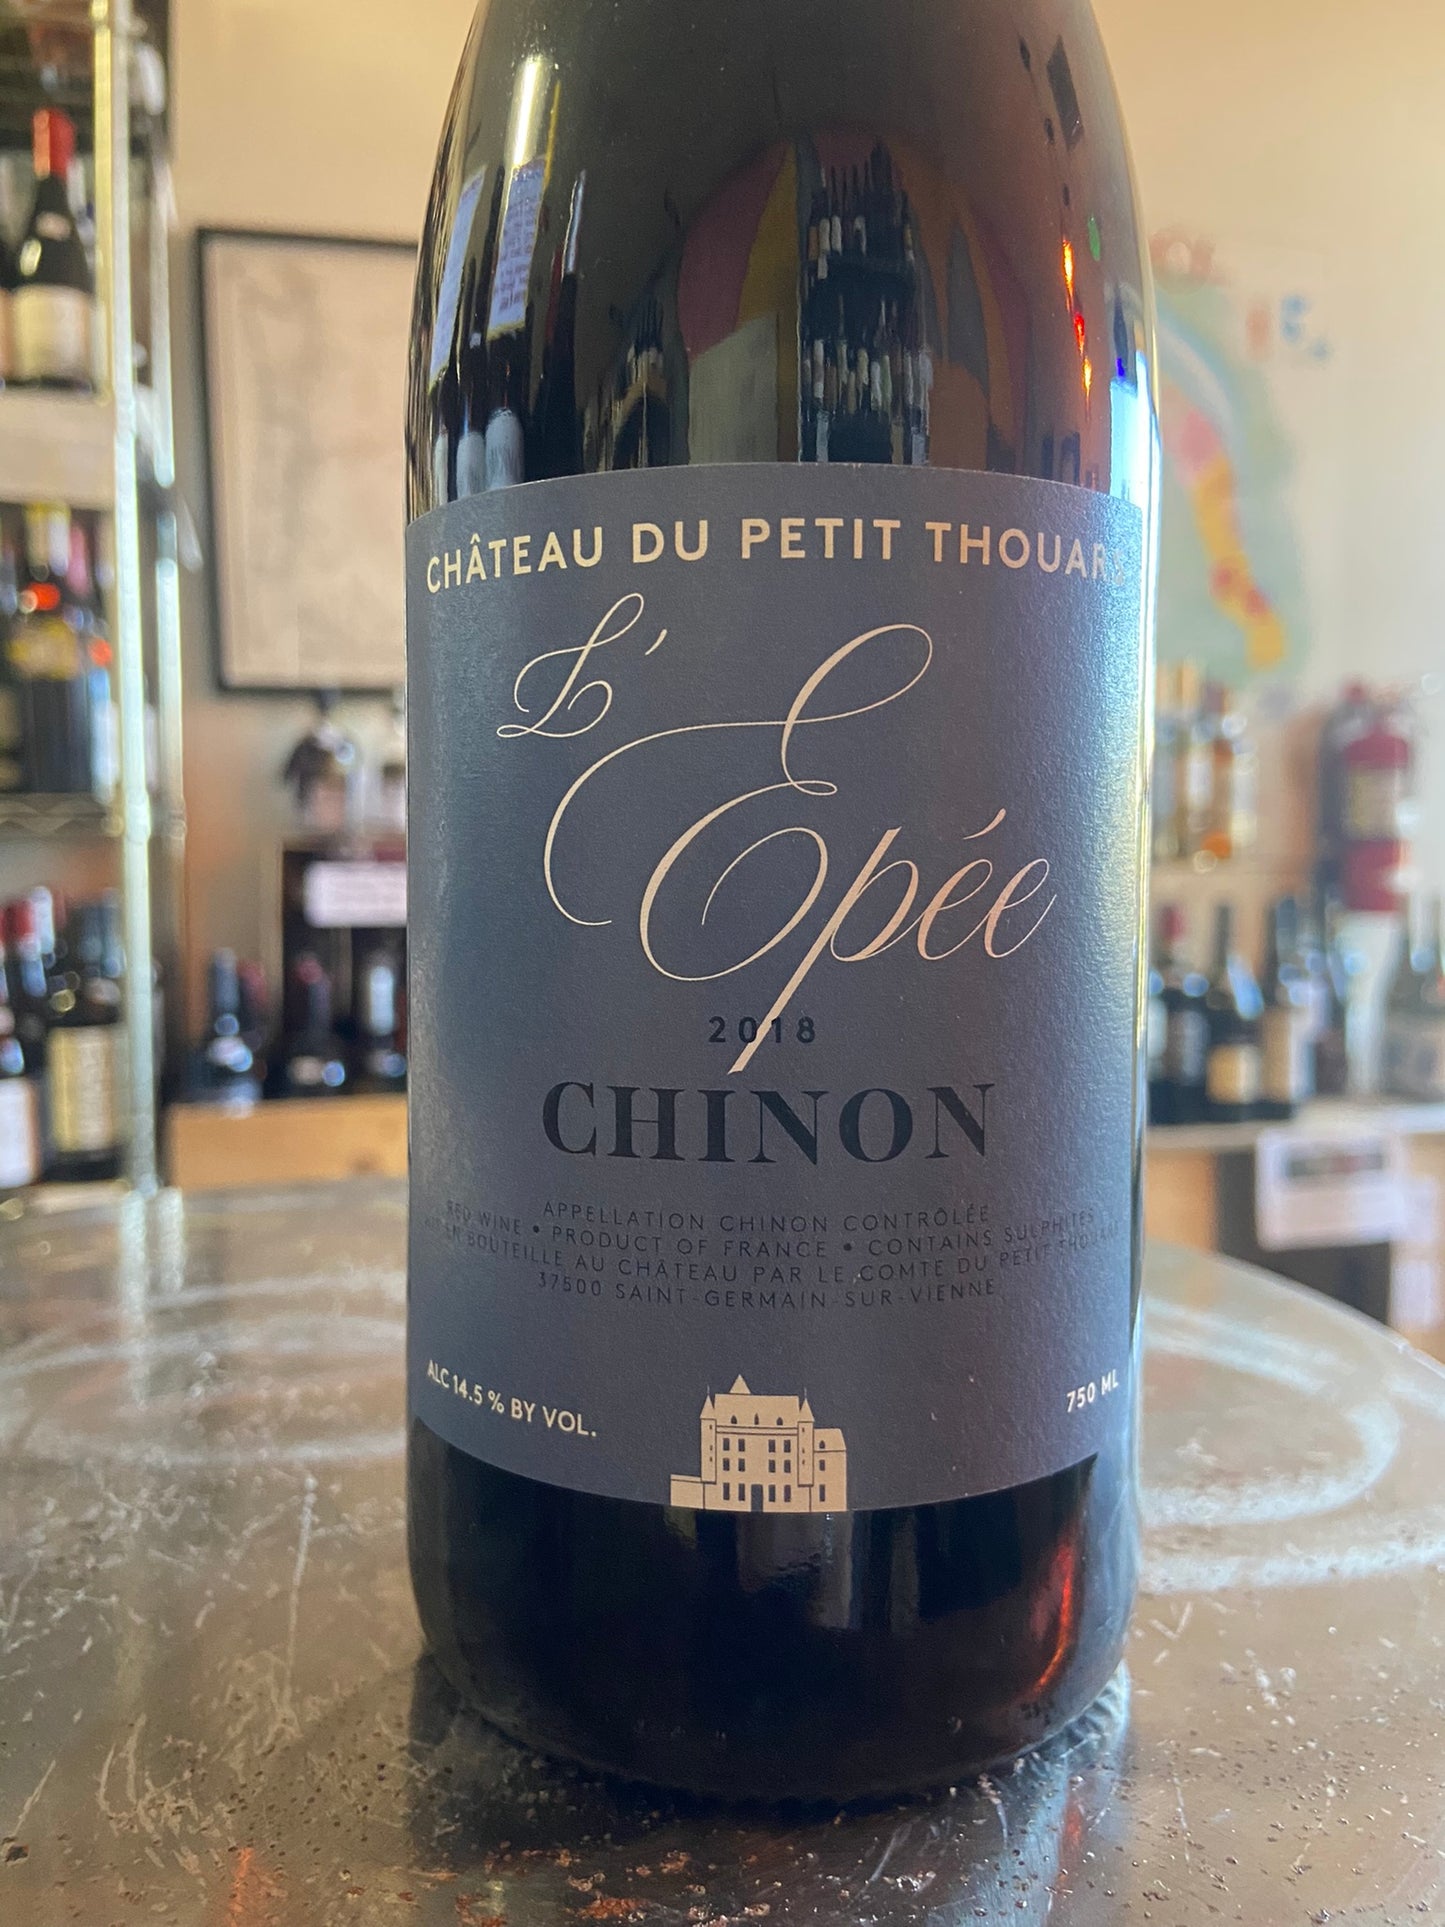 CHATEAU DU PETIT THOUARS 2018 Chinon 'L'Epee' (Loire, France)